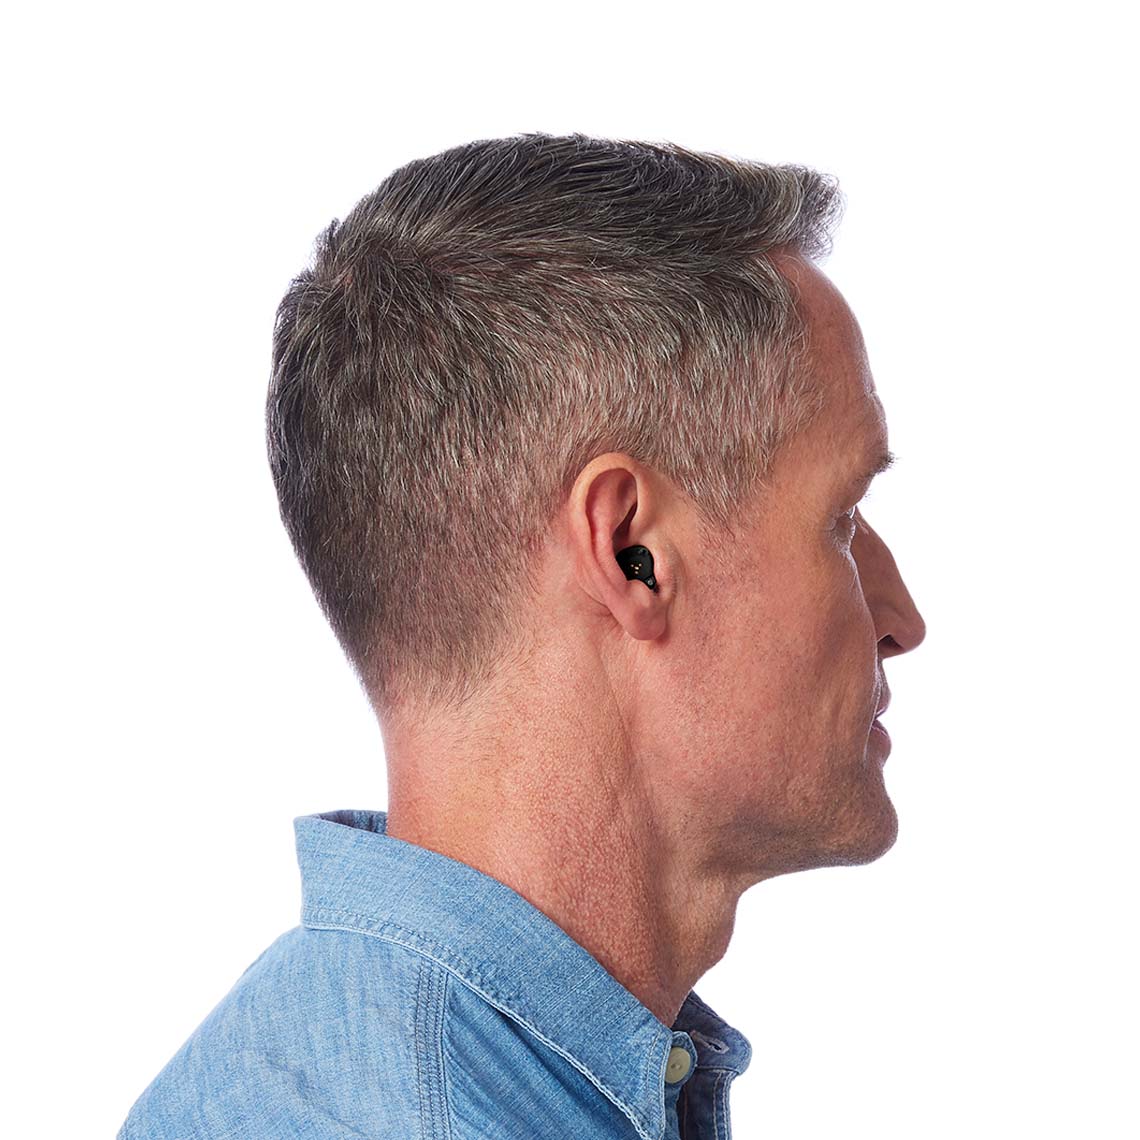 A Black ITC R shown in a man's ear